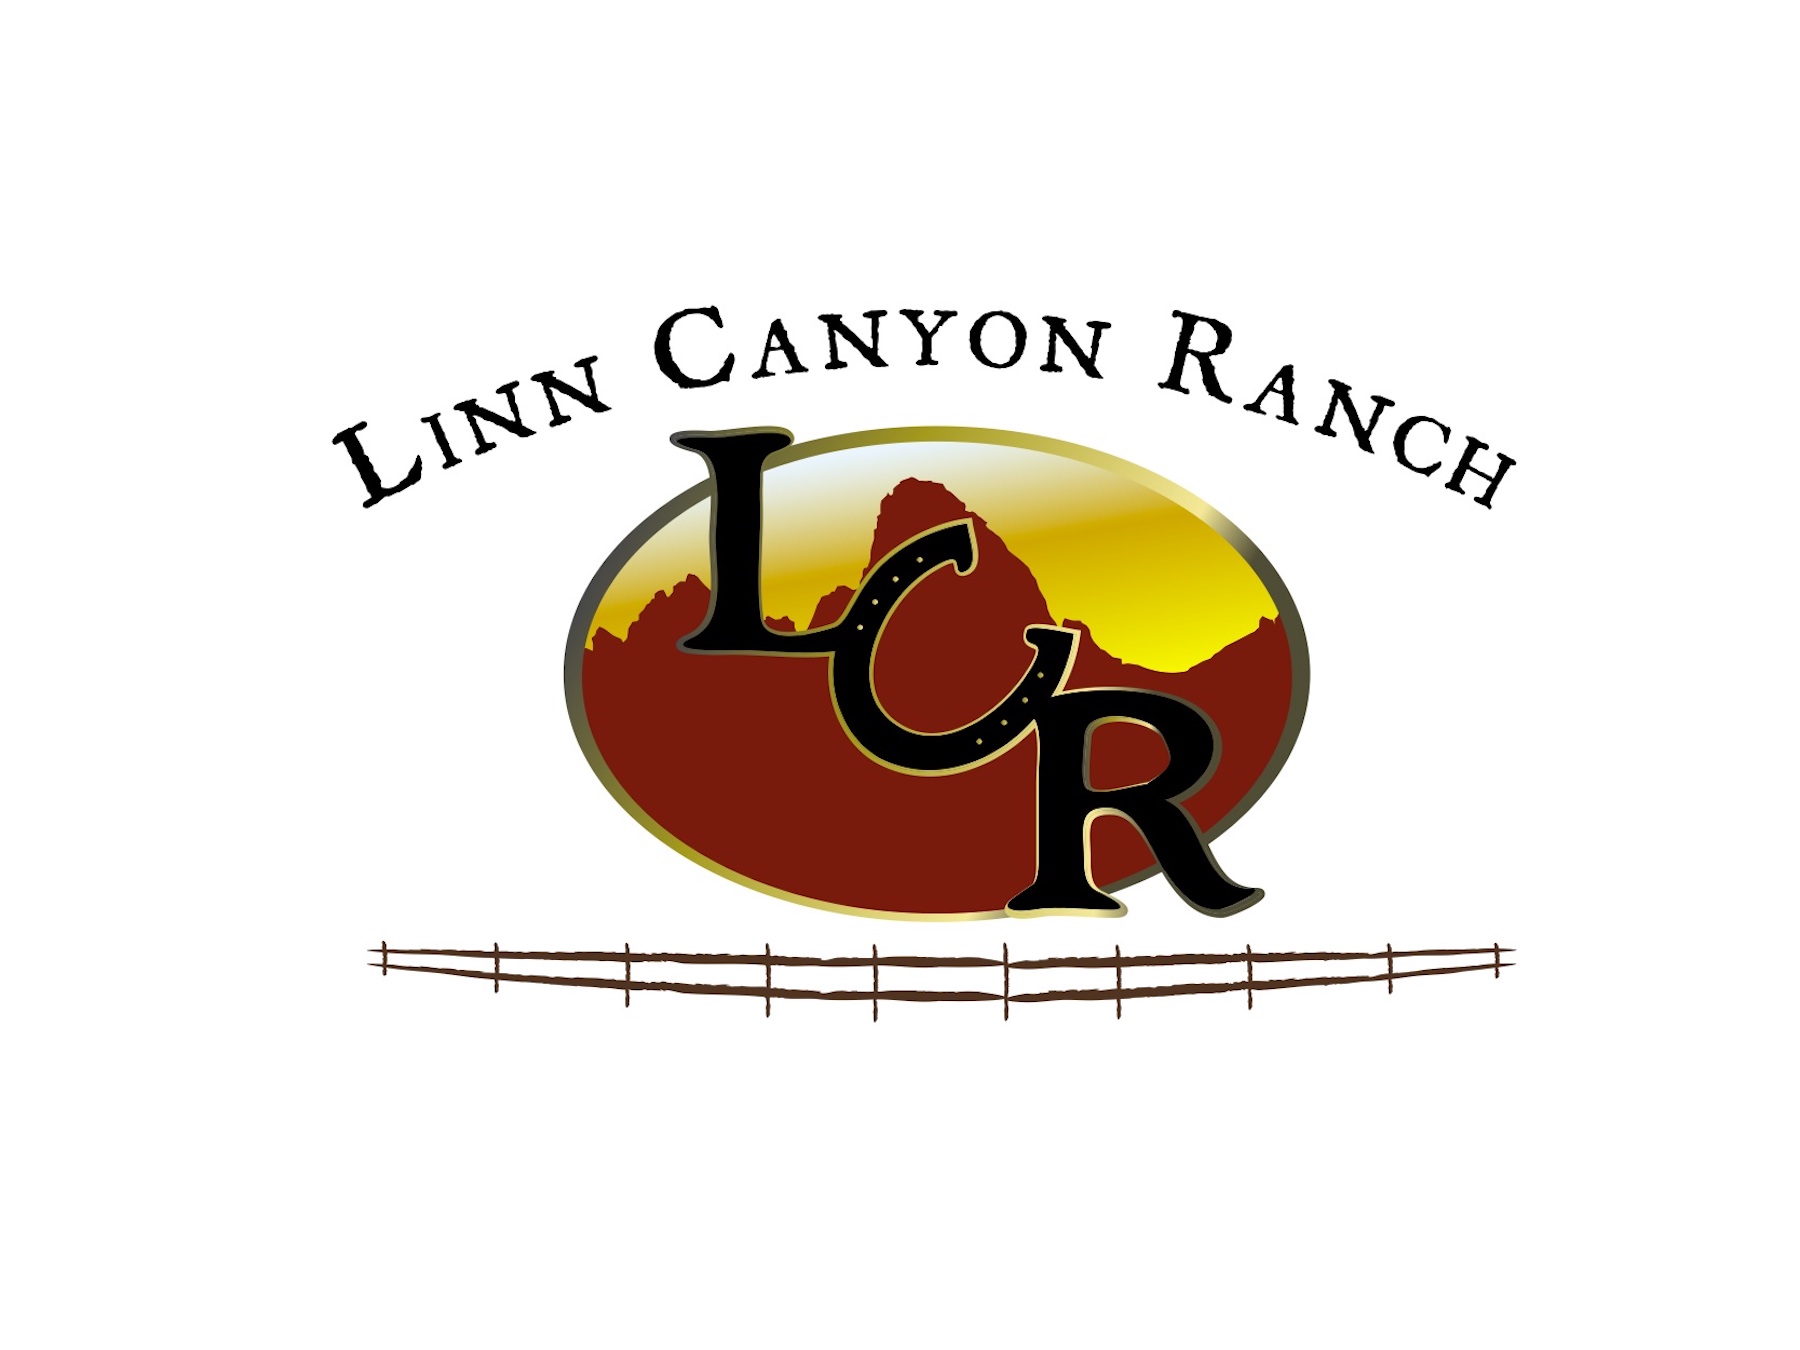 Linn Canyon Ranch